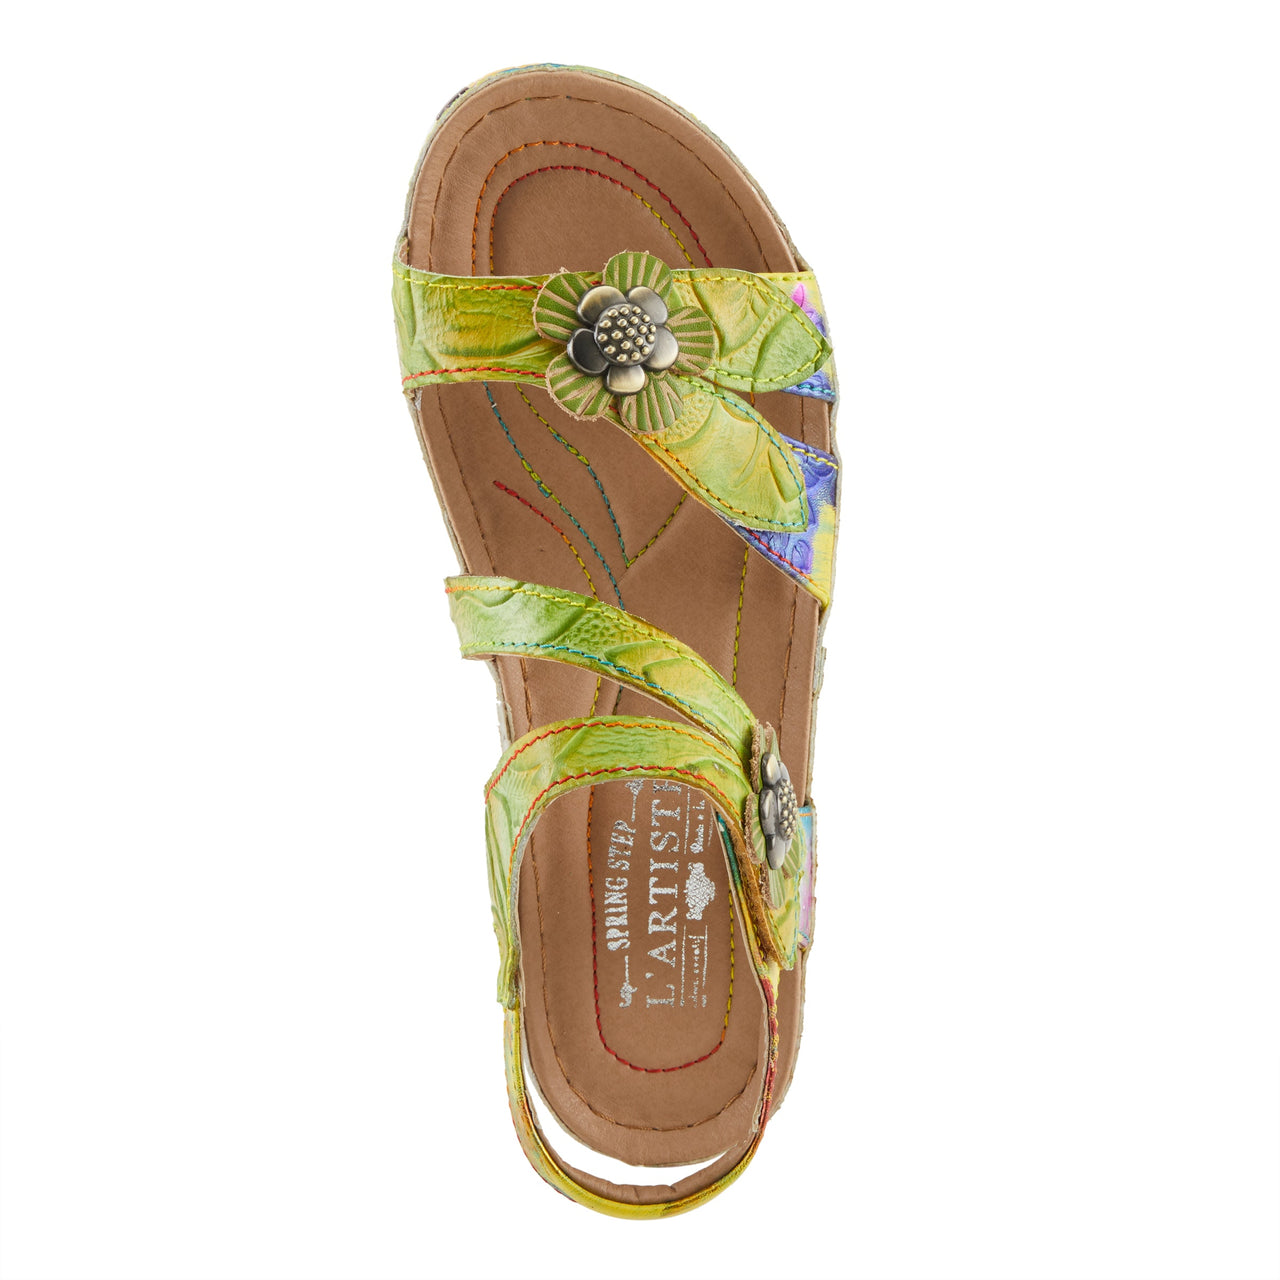 Spring Step Shoes L'Artiste Calista Sandals